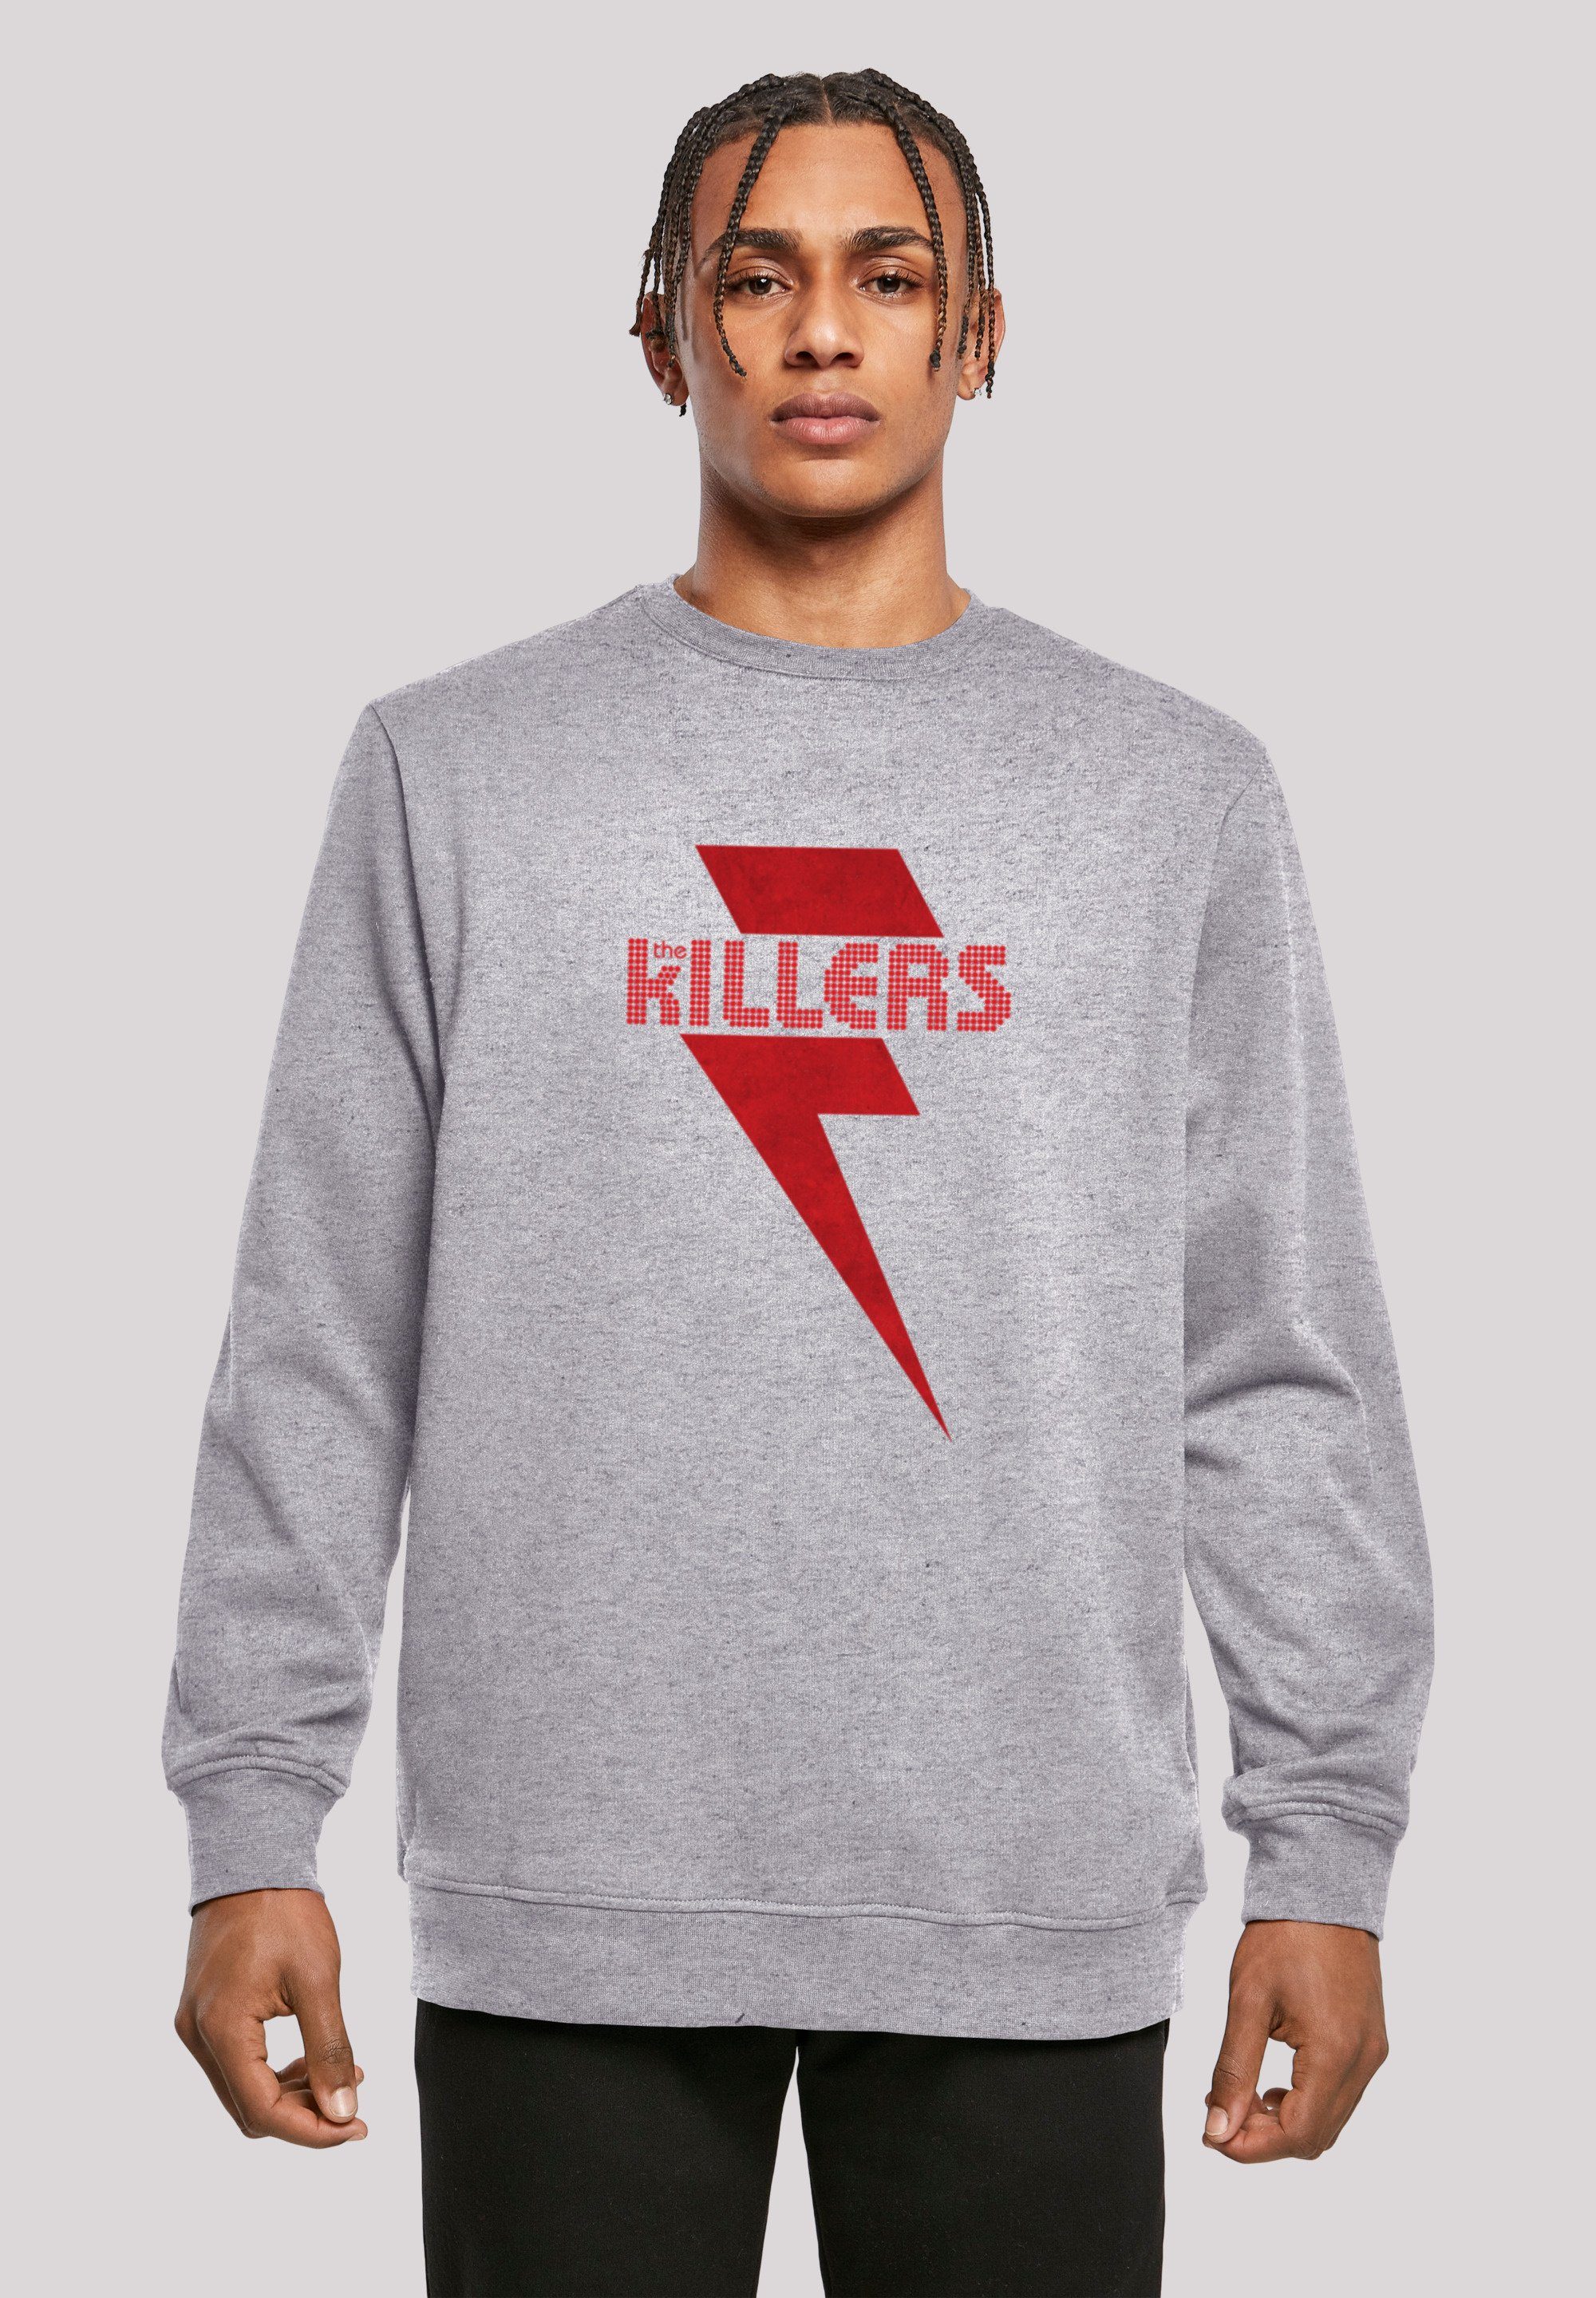 The The F4NT4STIC Killers Killers lizenziertes Offiziell Sweatshirt Rock Print, Band Red Kapuzenpullover Bolt